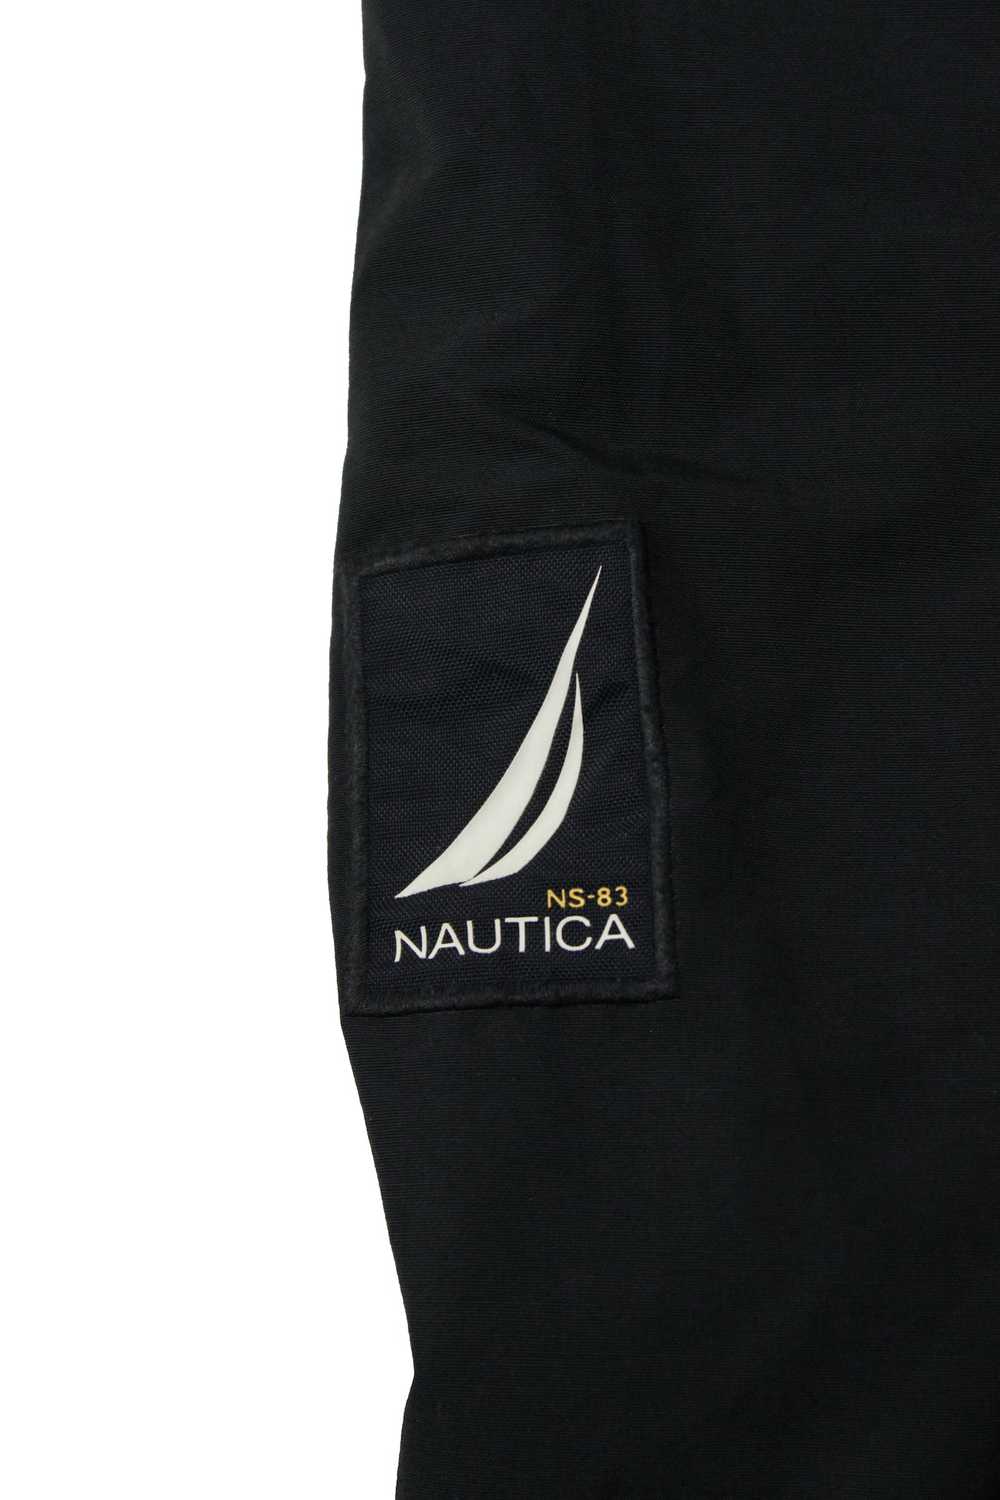 Nautica Vintage Nautica Jacket Small - image 4